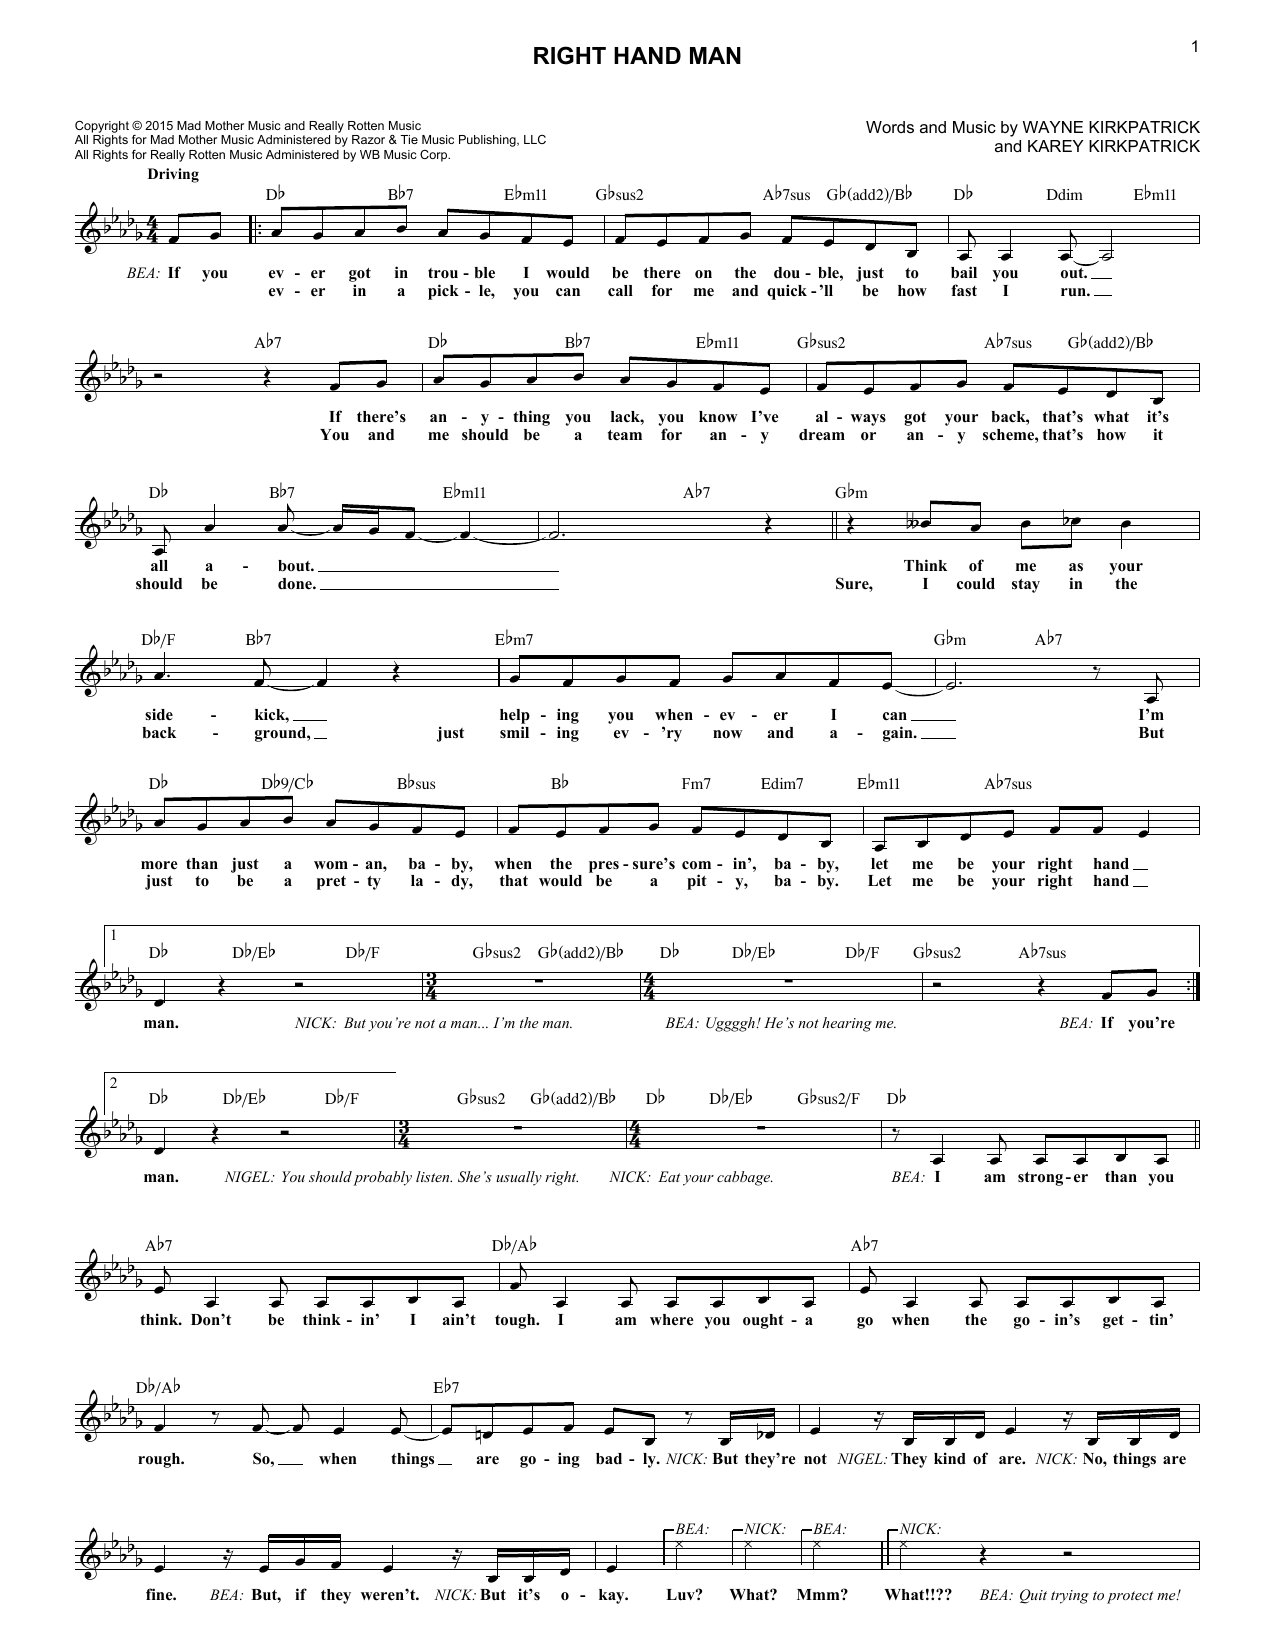 Karey Kirkpatrick Right Hand Man Sheet Music Notes & Chords for Melody Line, Lyrics & Chords - Download or Print PDF